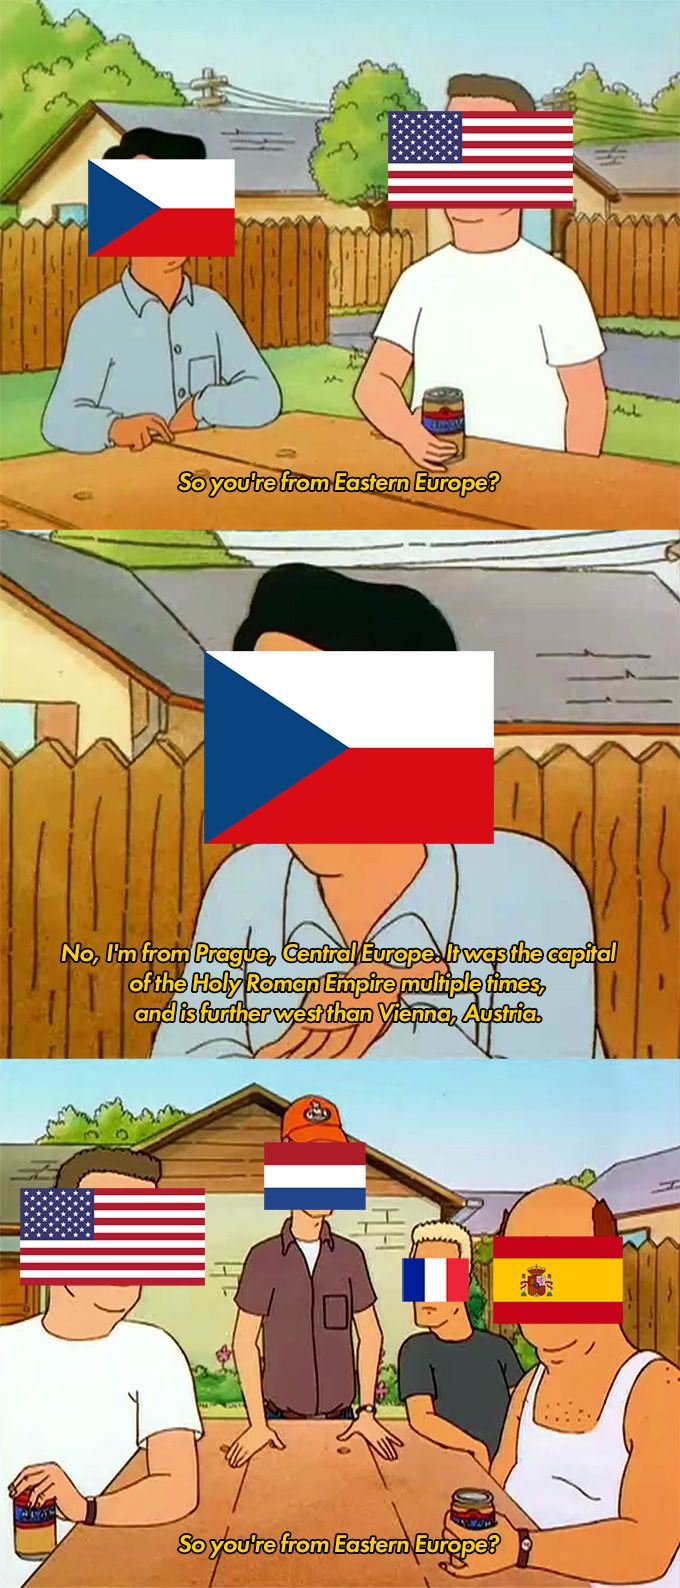 Central European feels